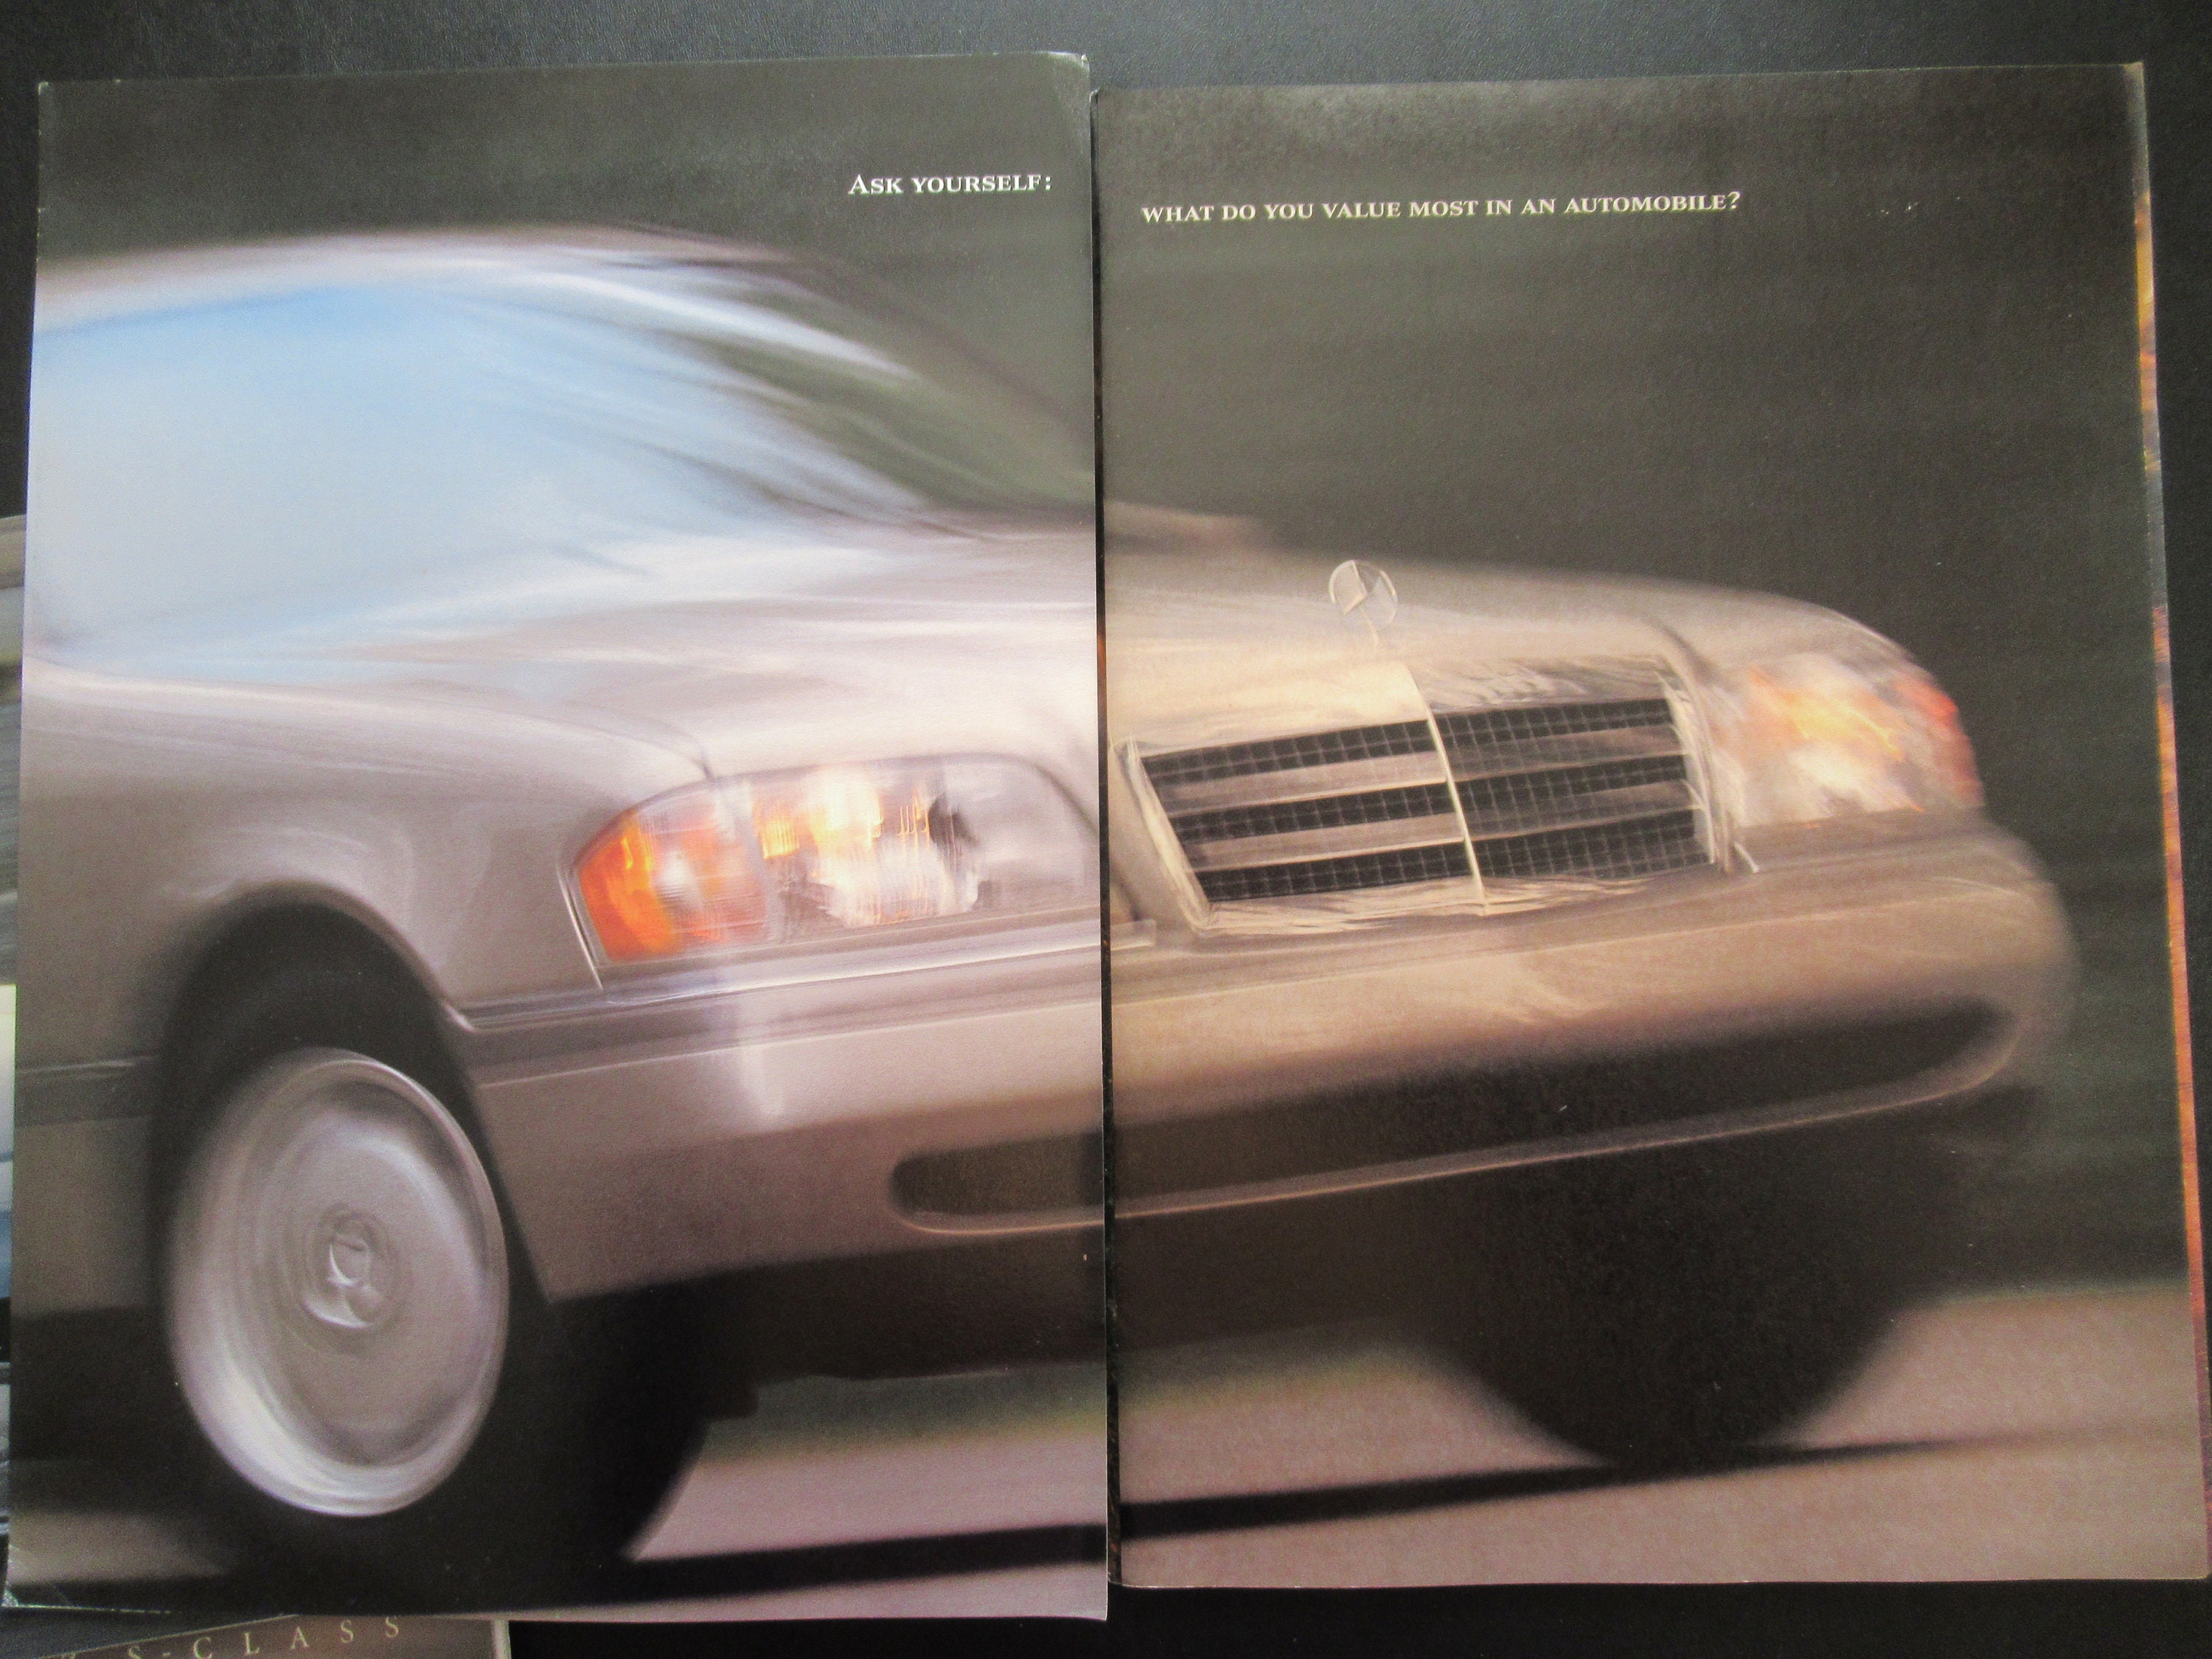 Mercedes-Benz C-Klasse Zubehör - Preisliste 1995 - Prospekt Brochure 0 –  car-brochure